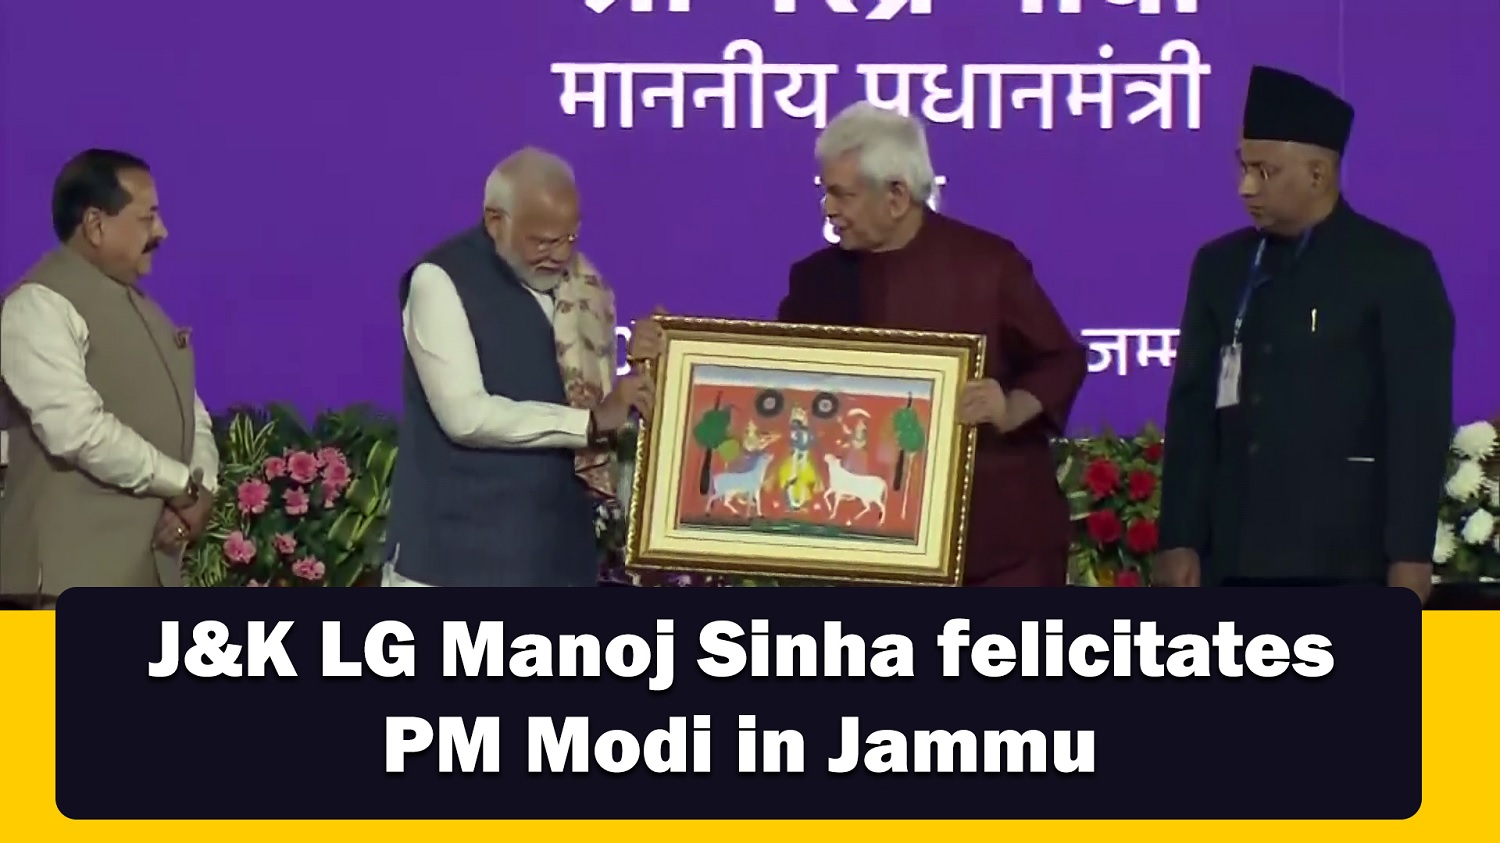 J&K LG Manoj Sinha felicitates PM Narendra Modi in Jammu